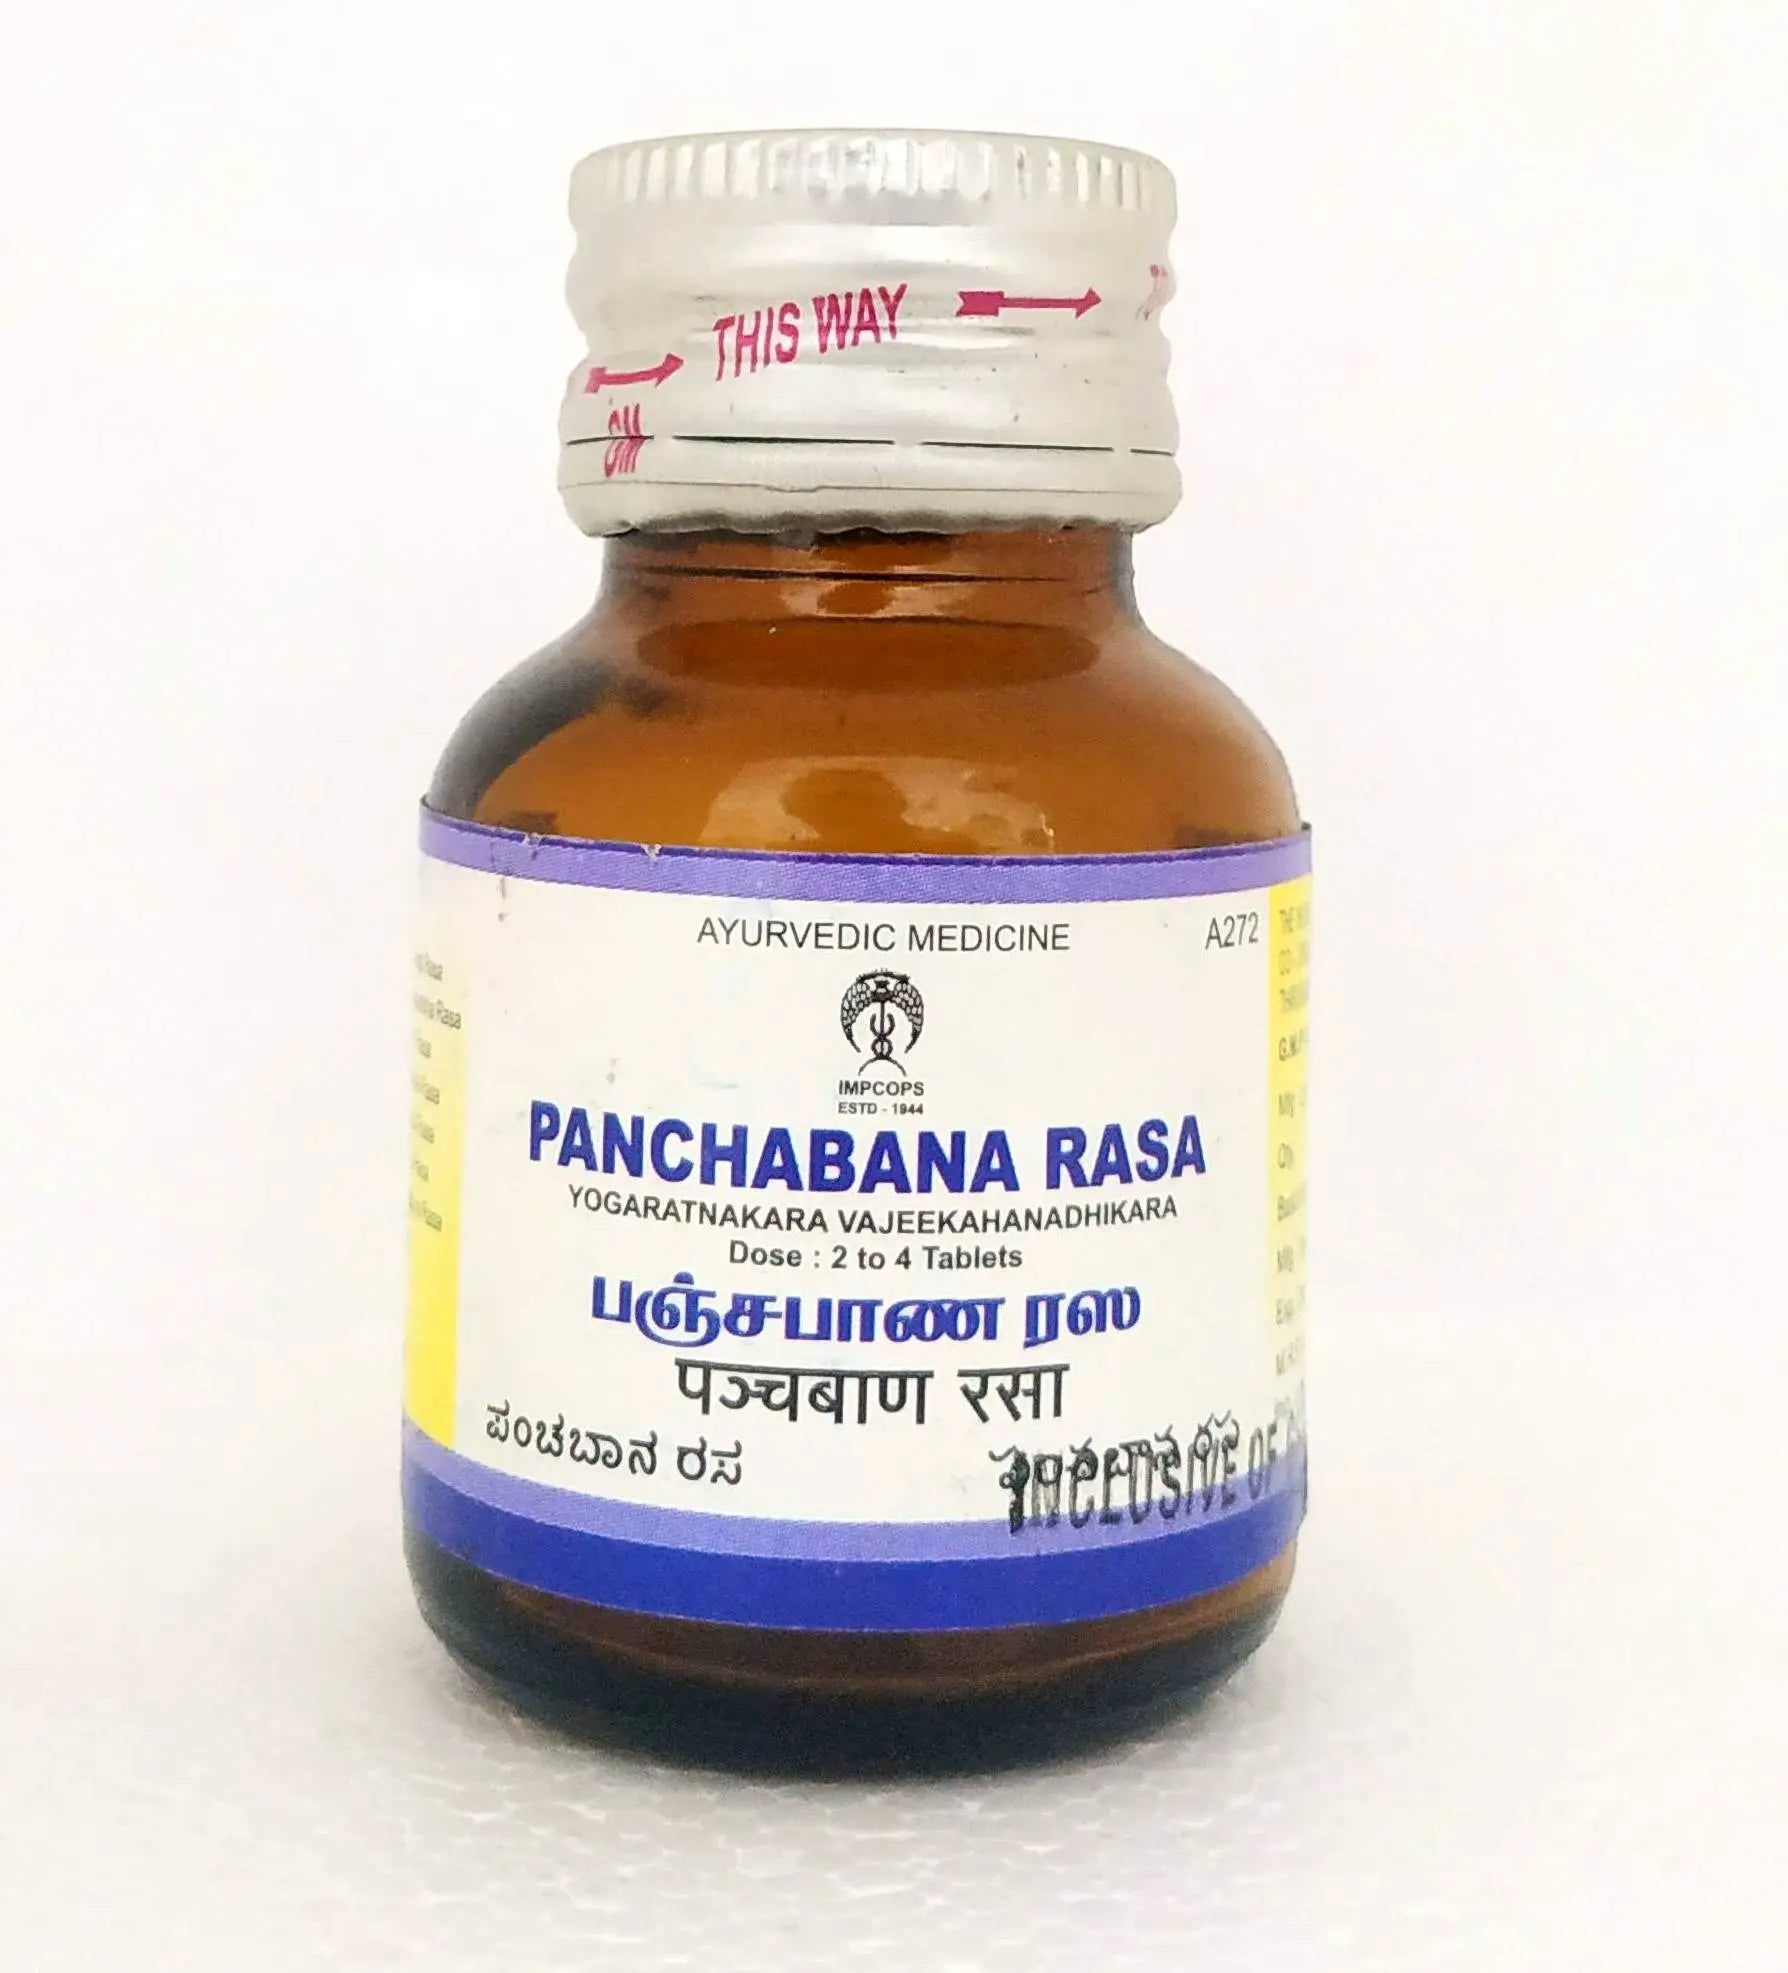 Panchabana rasa tablets - 2gm Impcops